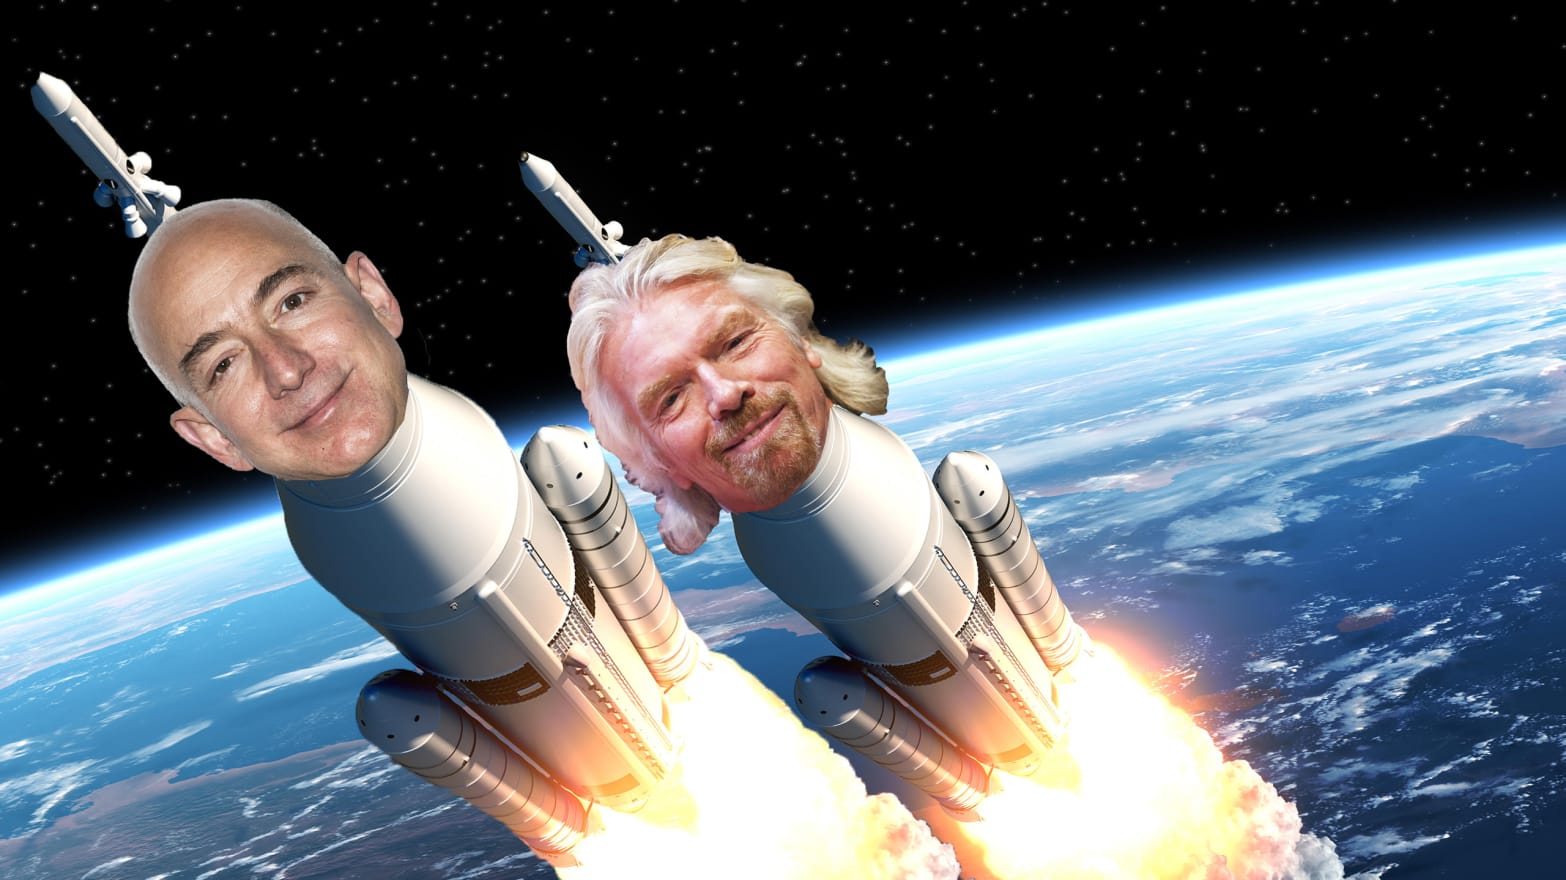 Jeff Bezos Ready to Beat Richard Branson in the Billionaire Space Race